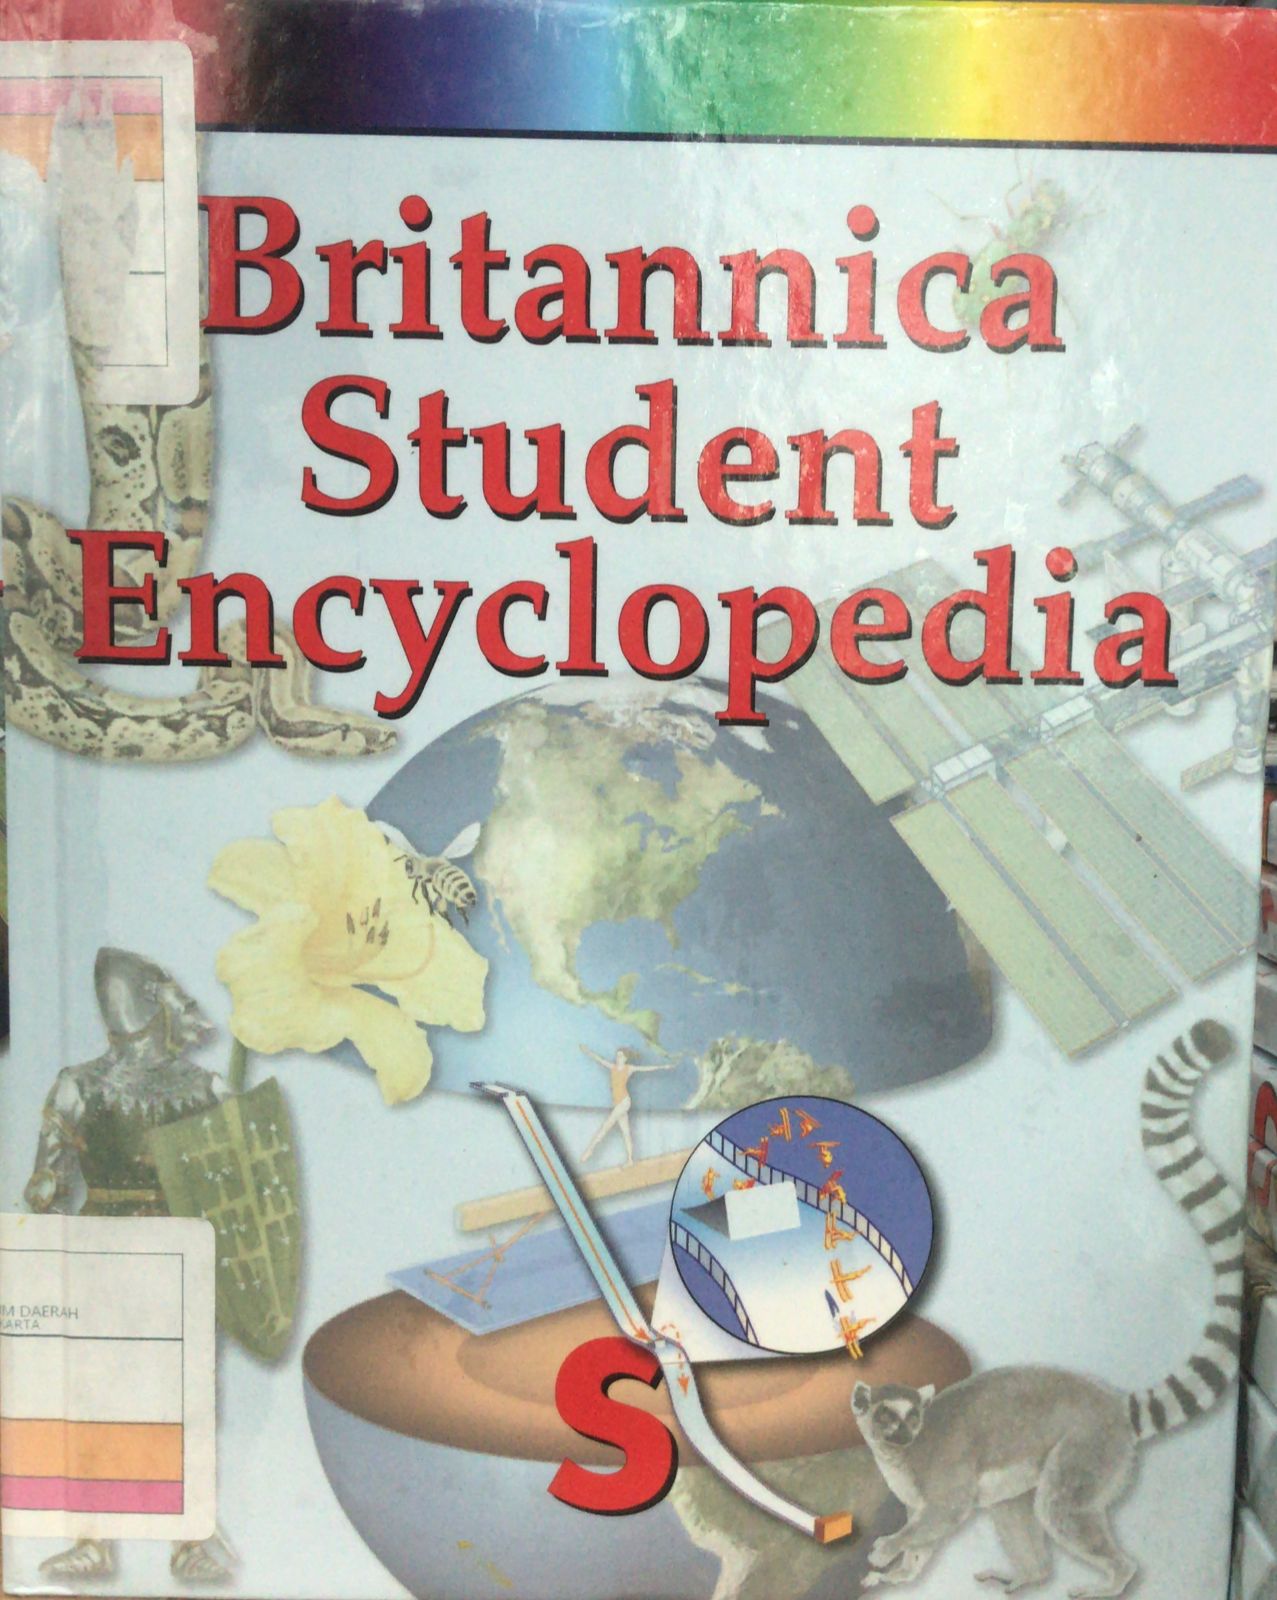 Britannica Student Encyclopedia Vol. 12 :  S